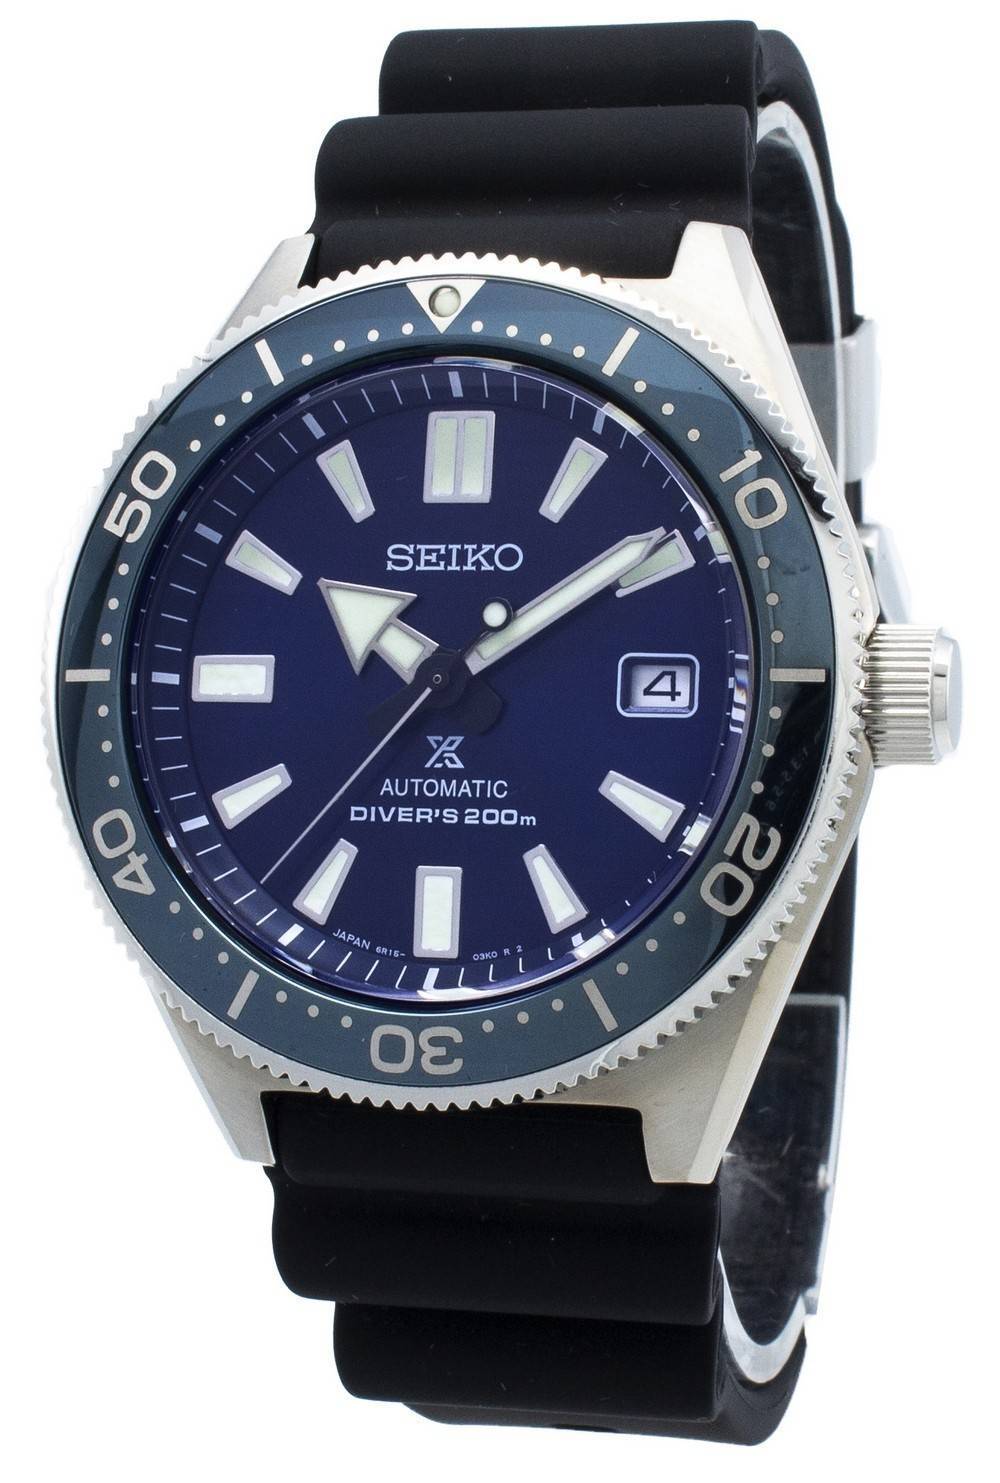 Đồng hồ Seiko Prospex SBDC053 Diver's 200M Automatic Japan Made Men's Watch  vi